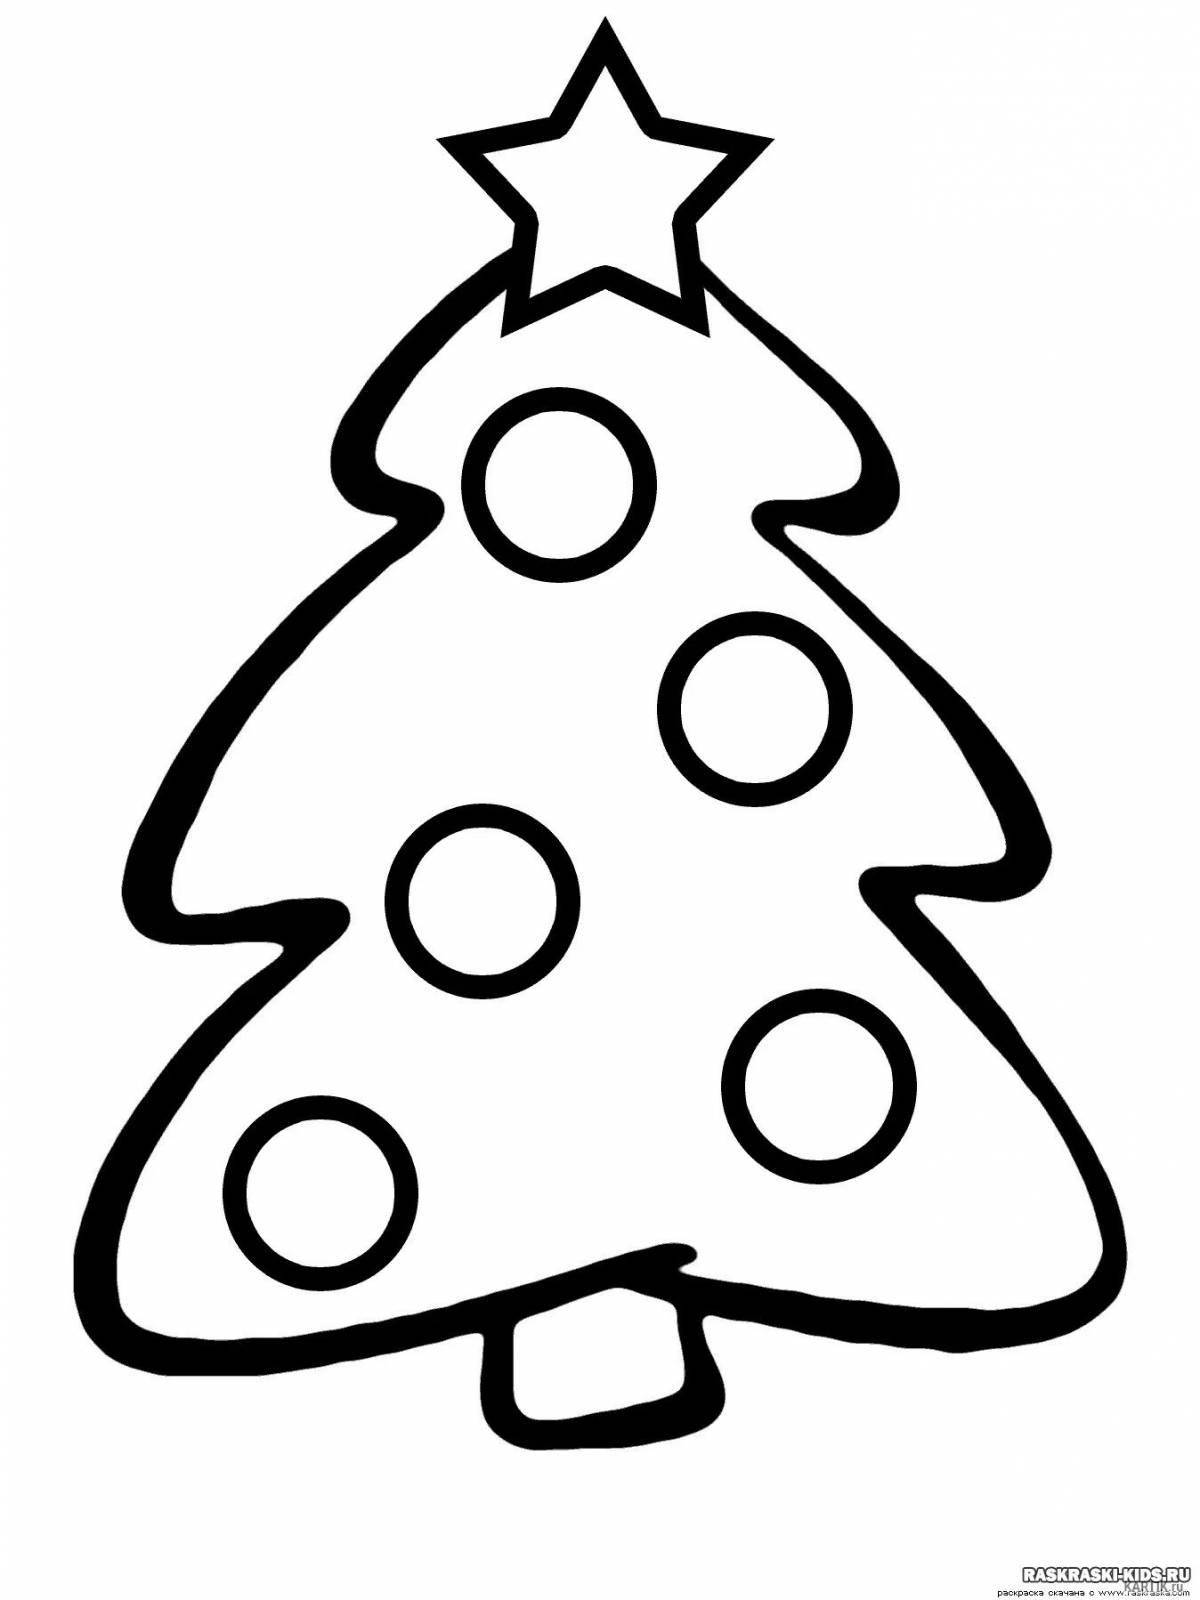 Fun Christmas tree drawing